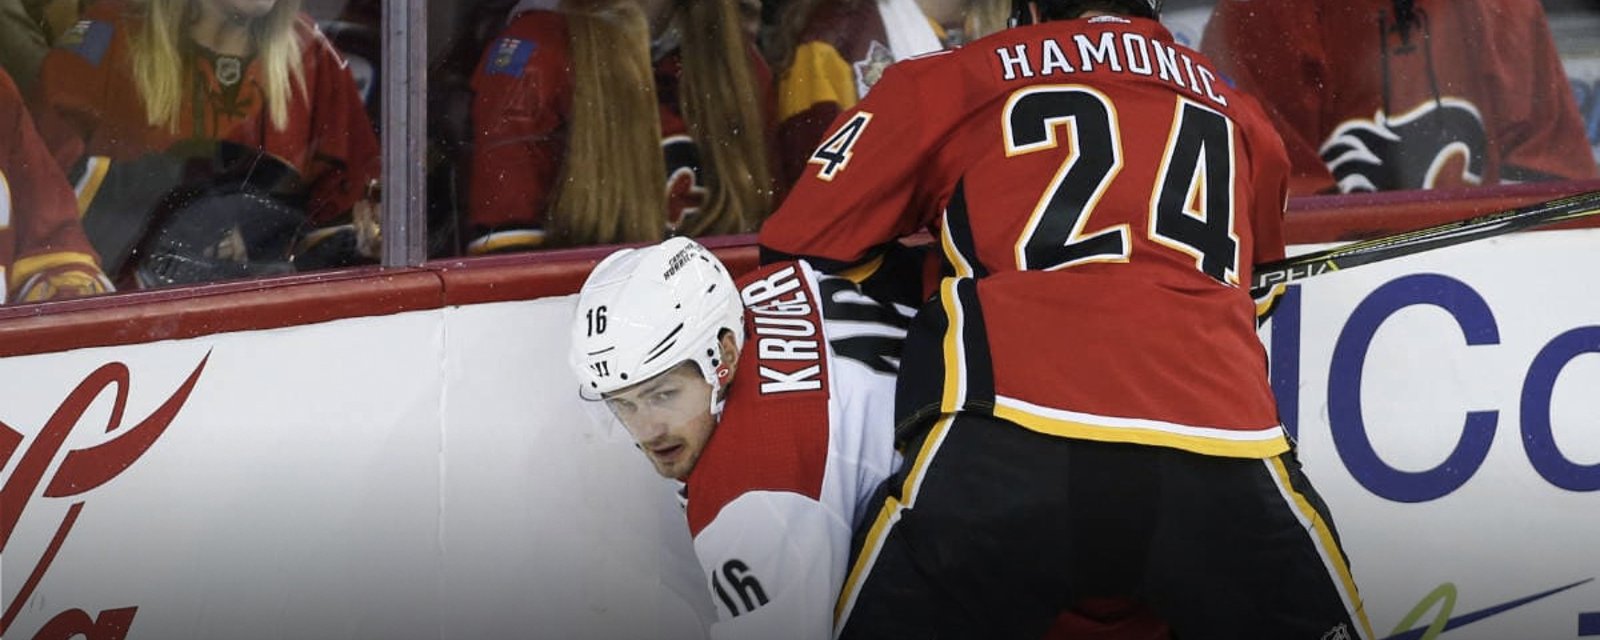 Breaking: Flames lose Hamonic's services